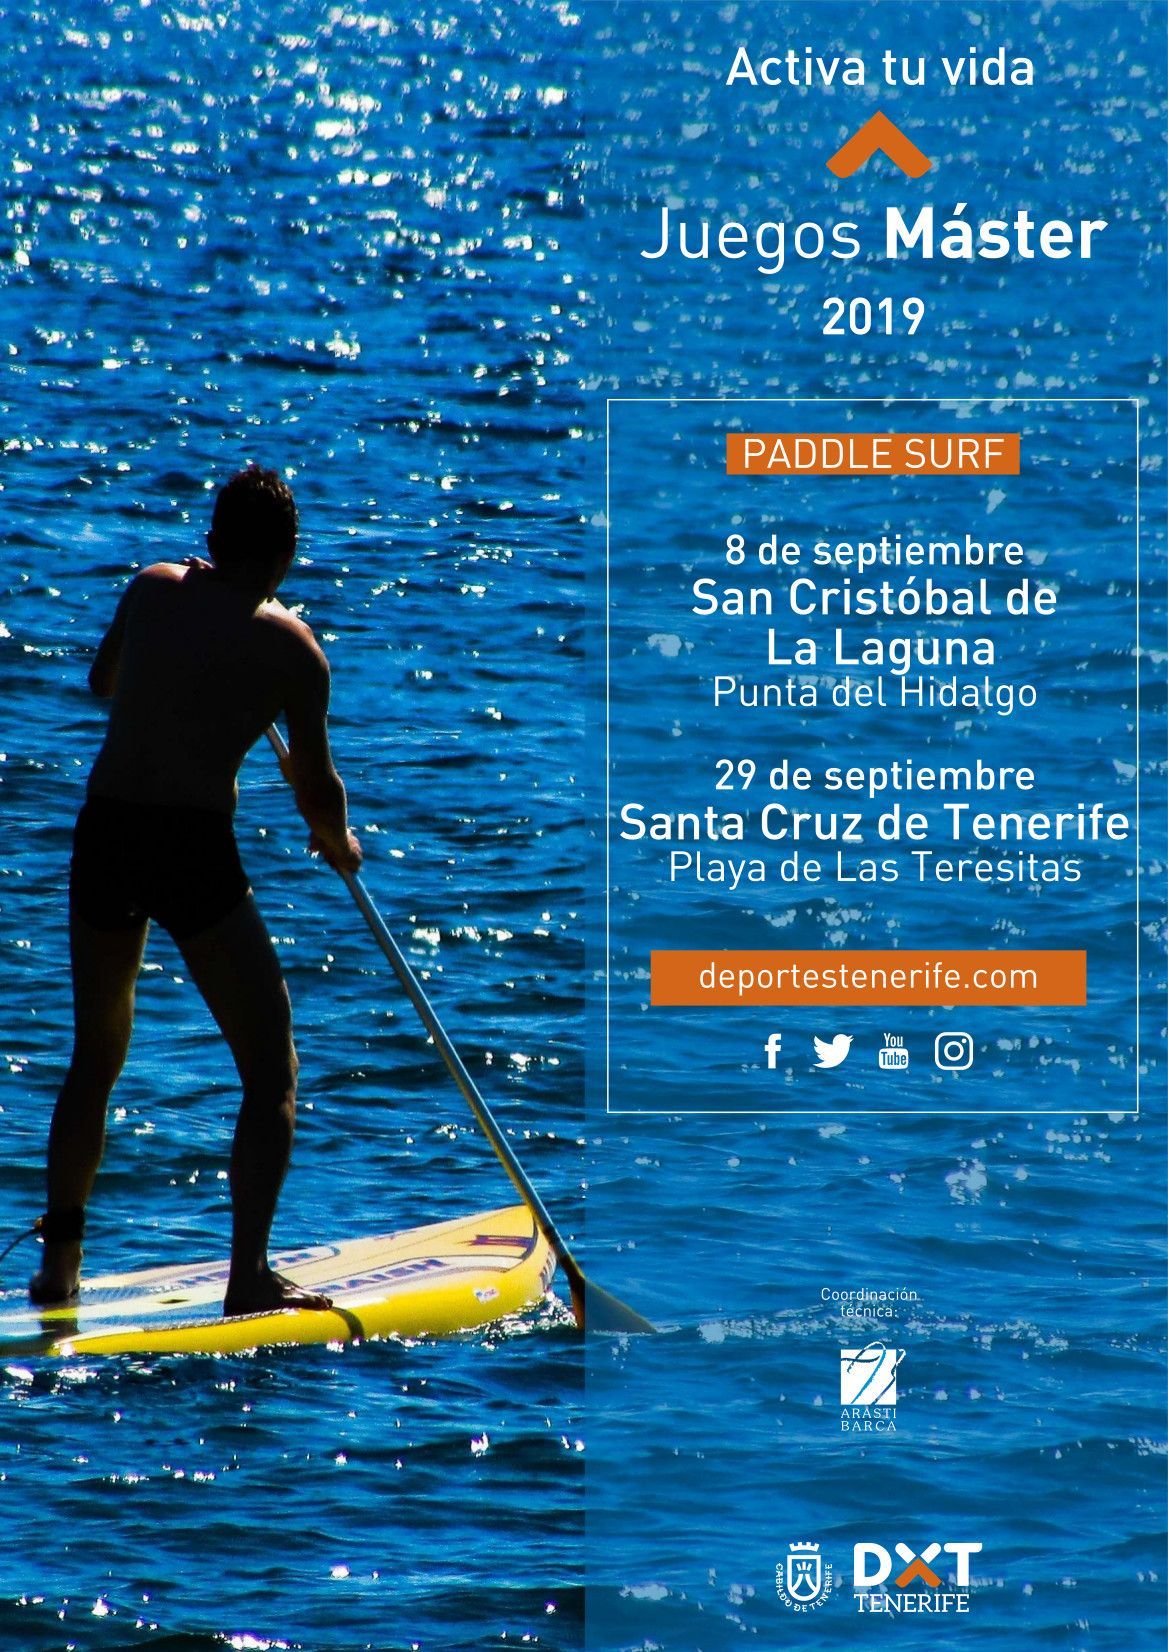 Paddle Surf Juegos Máster 2019